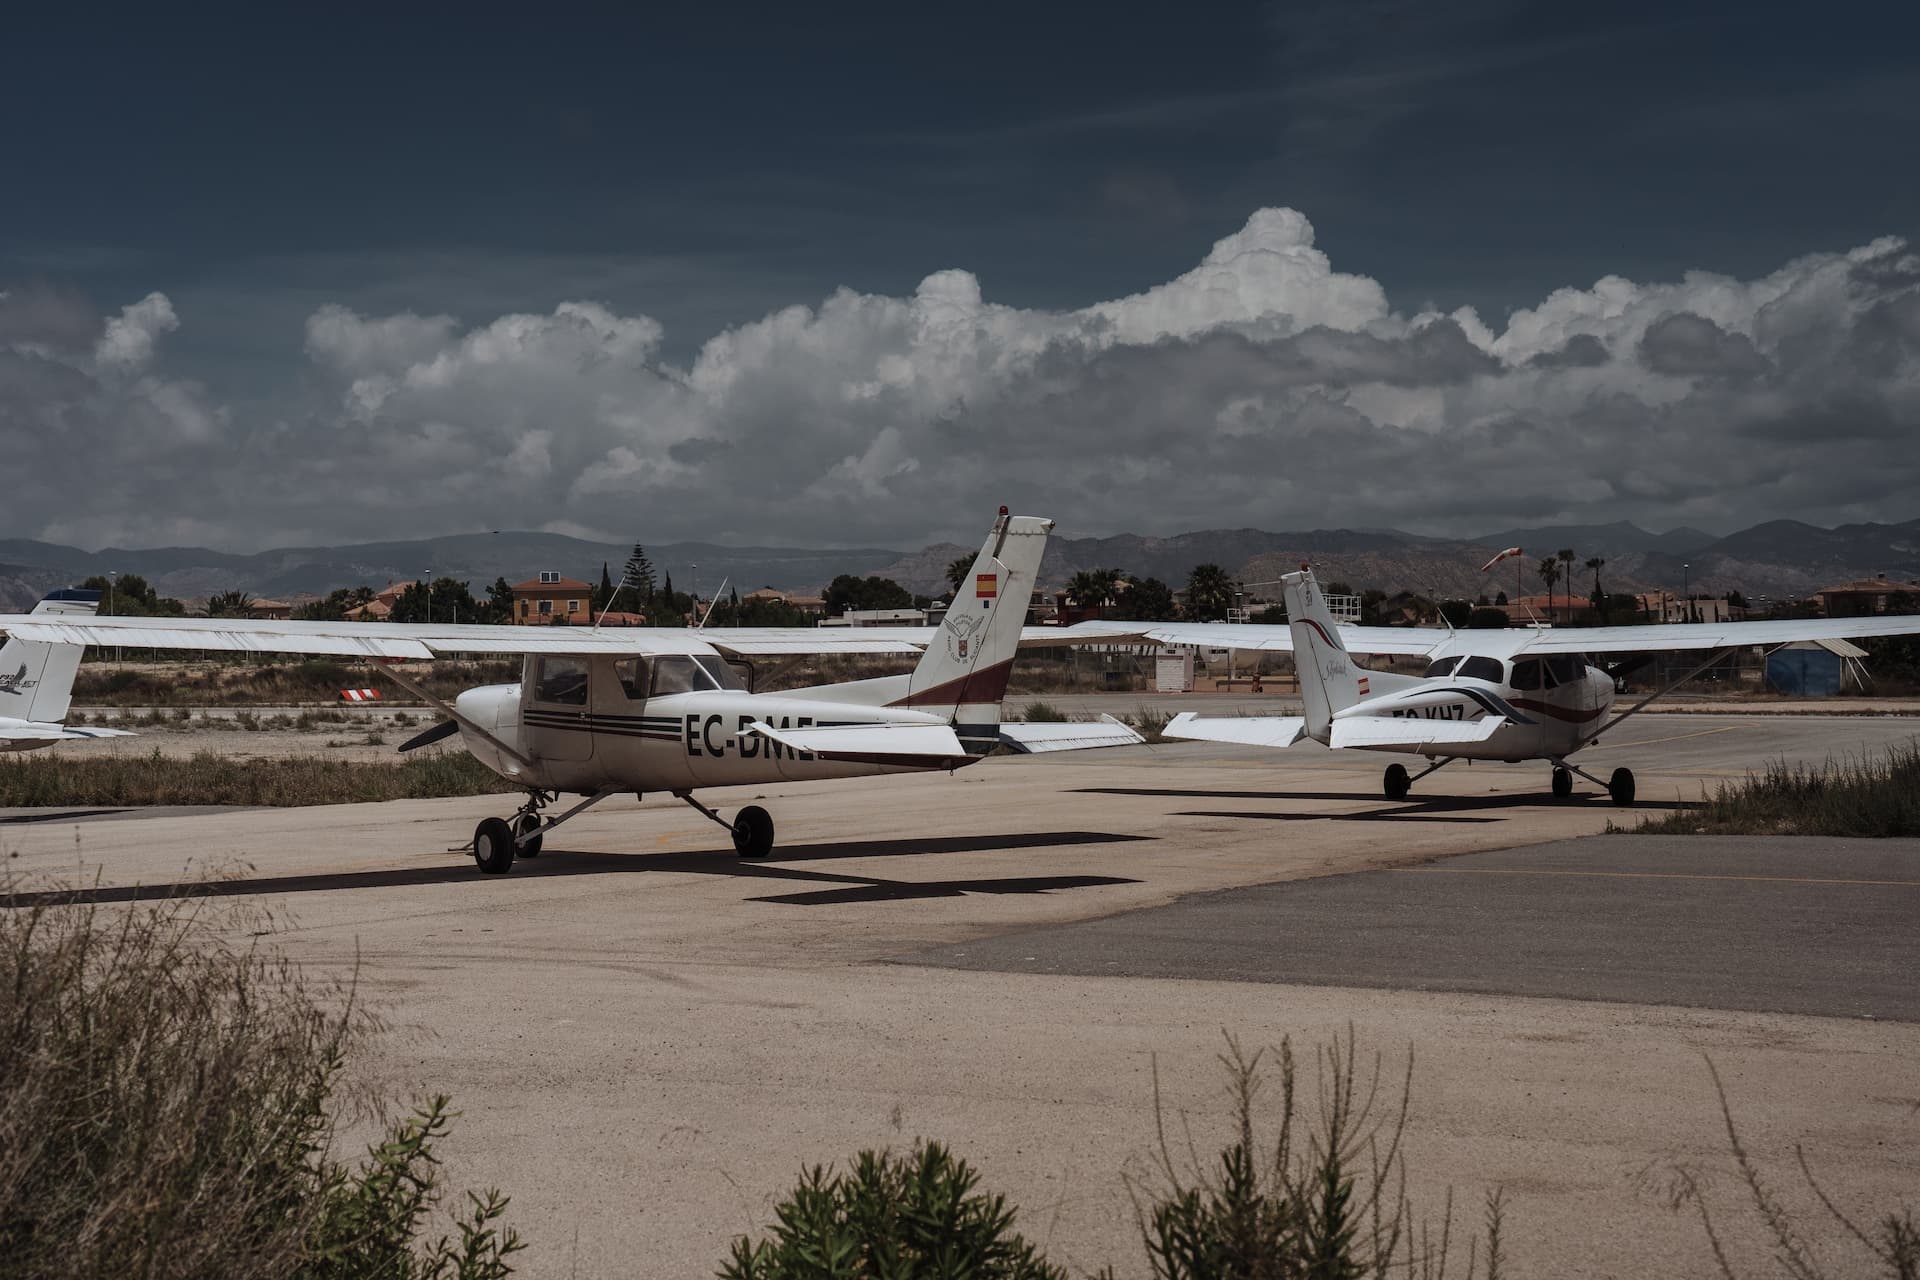 Reims-Cessna, Real Aeroclub de Alicante, Exciting travels, Aerial adventures, 1920x1280 HD Desktop